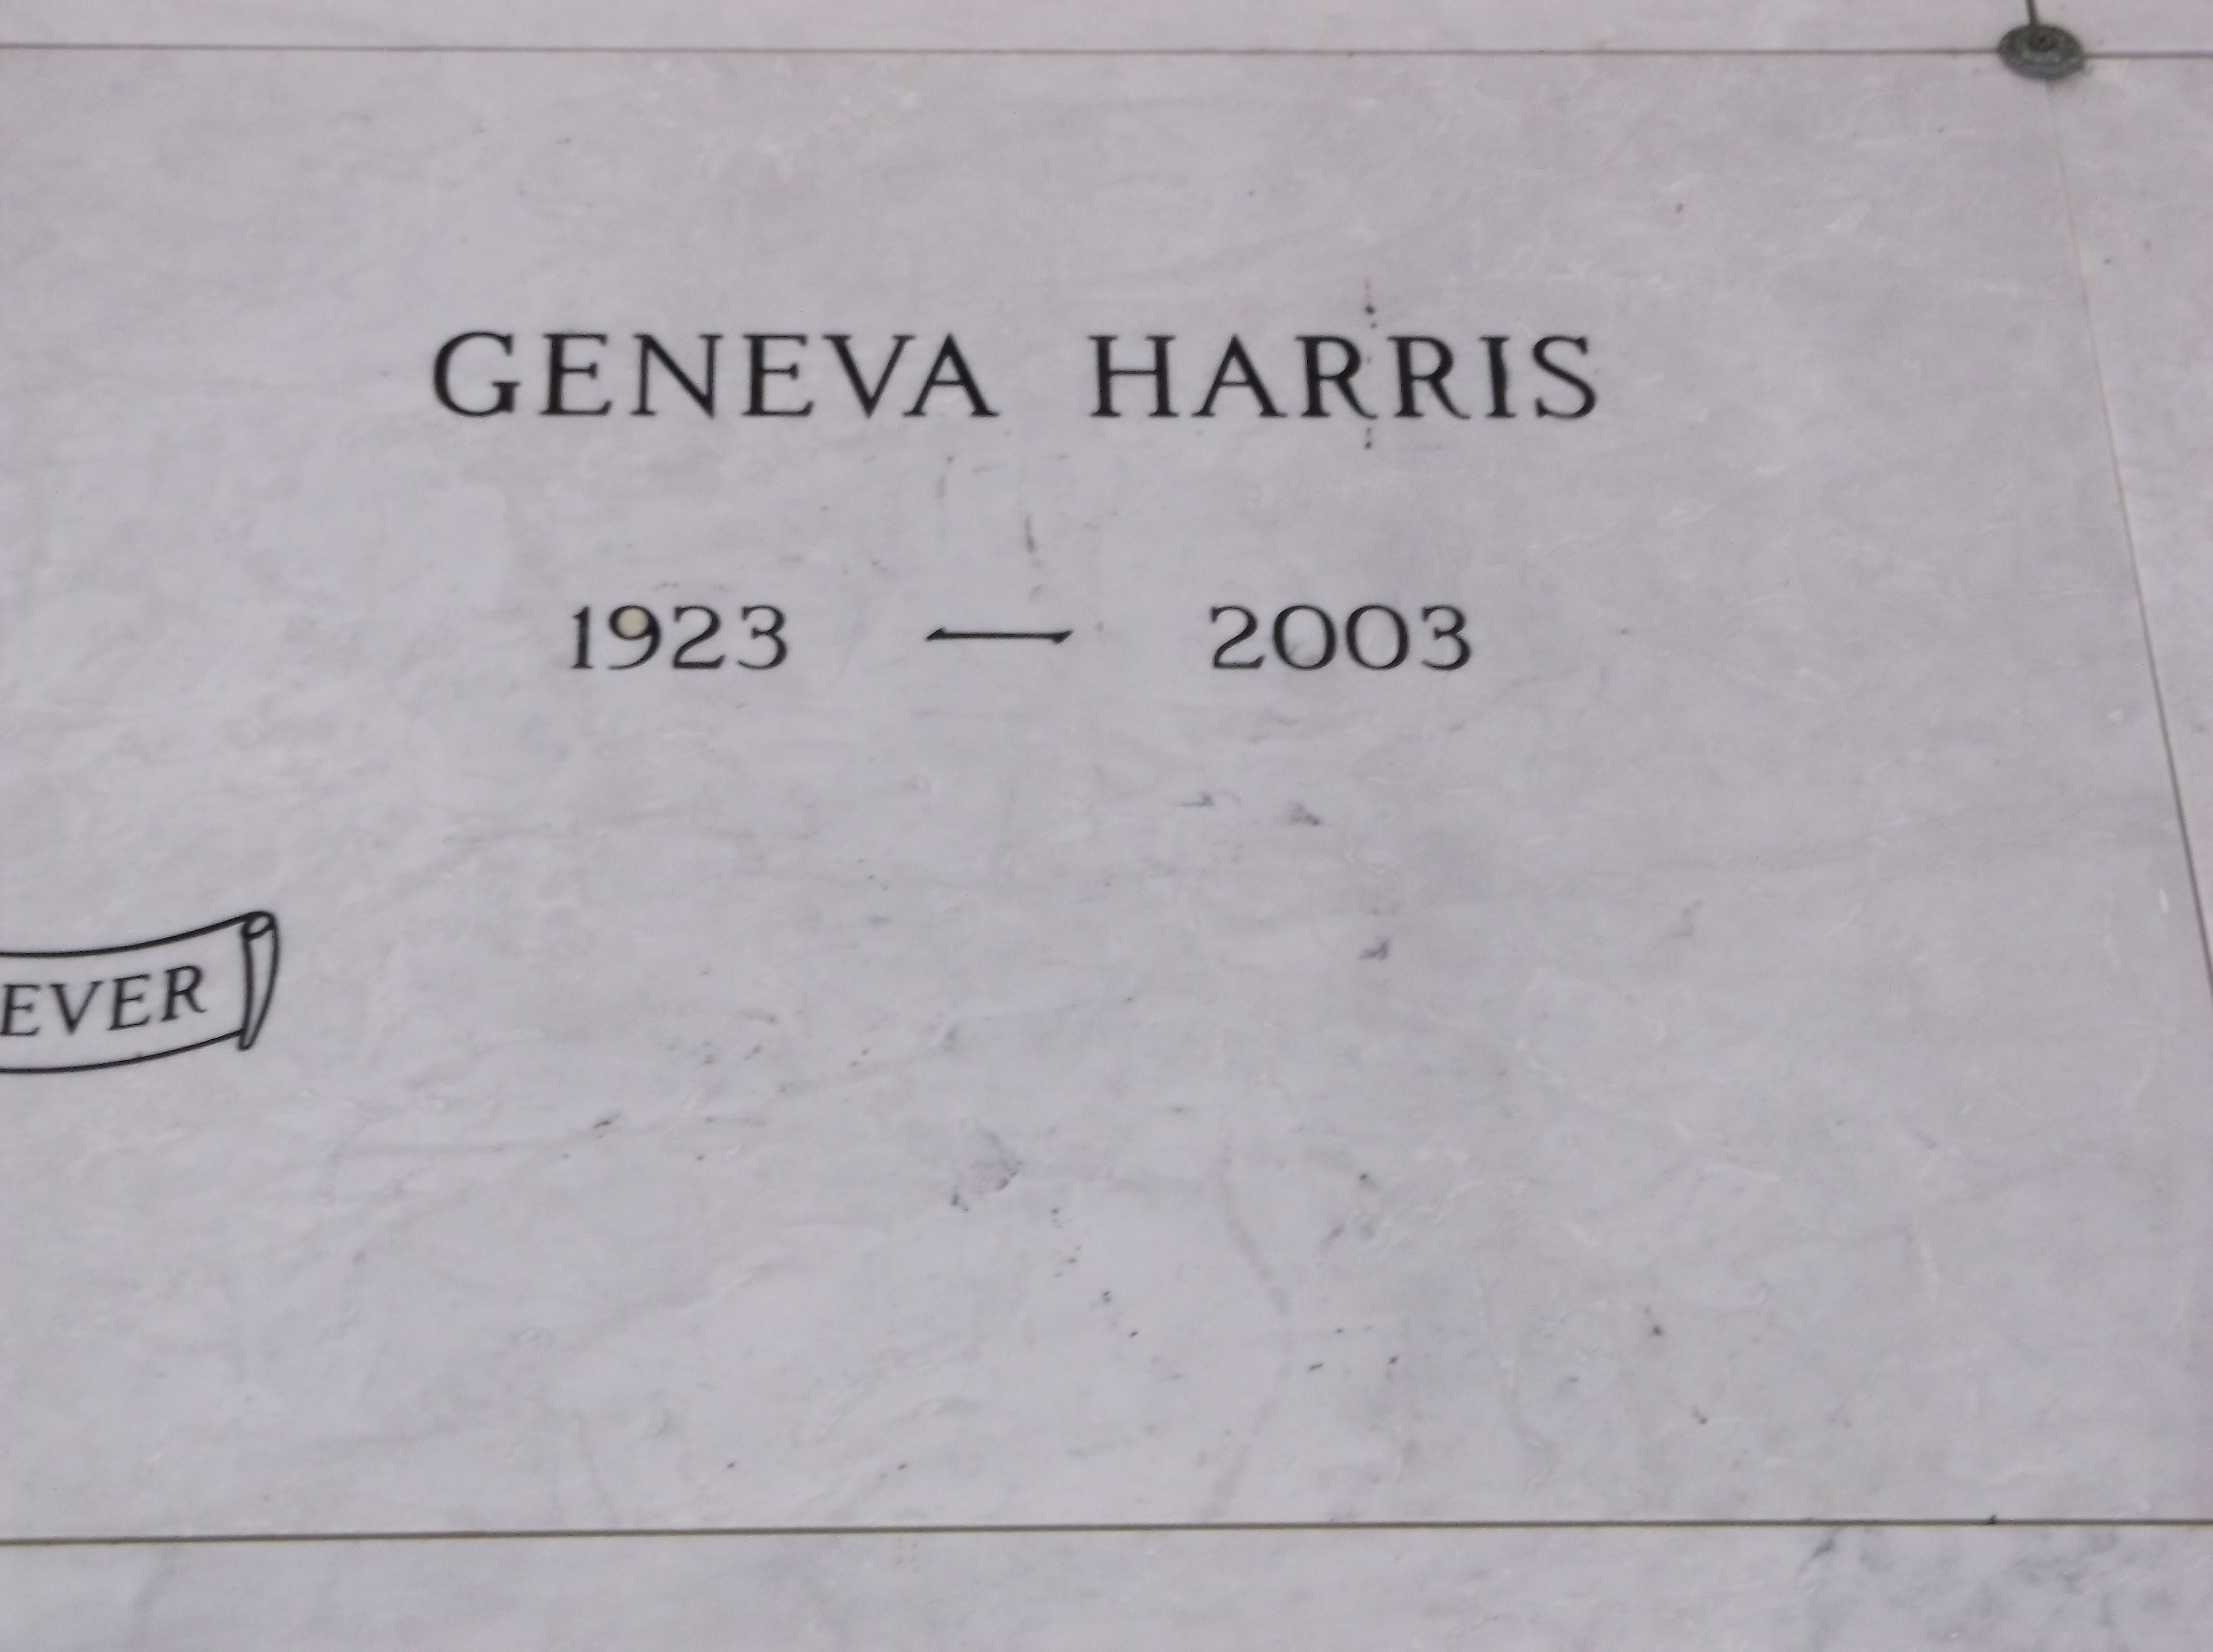 Geneva Harris